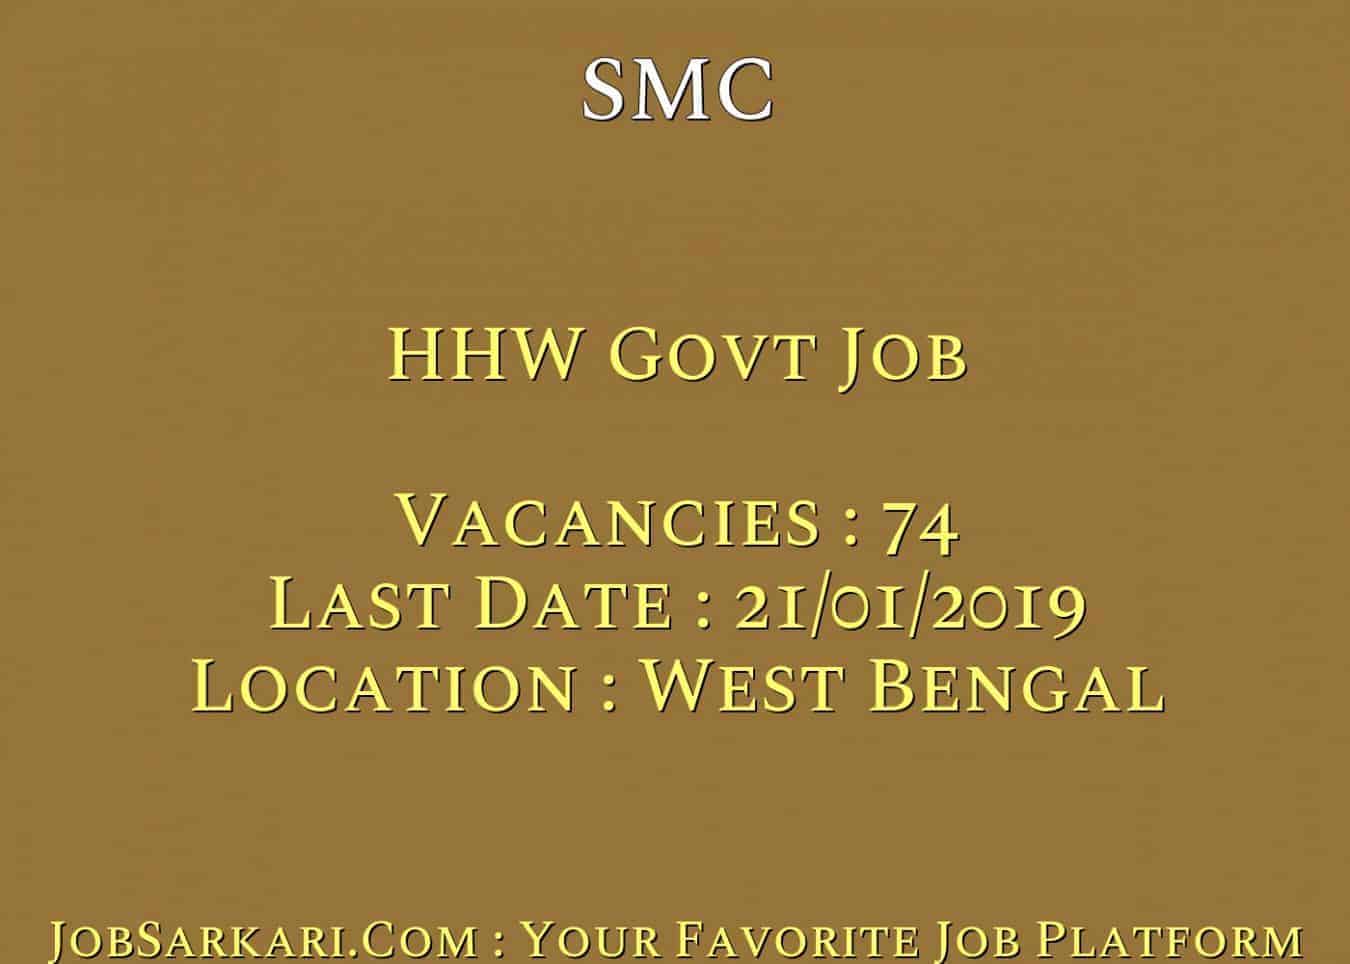 SMC Recruitment 2019 For HHW Govt Job